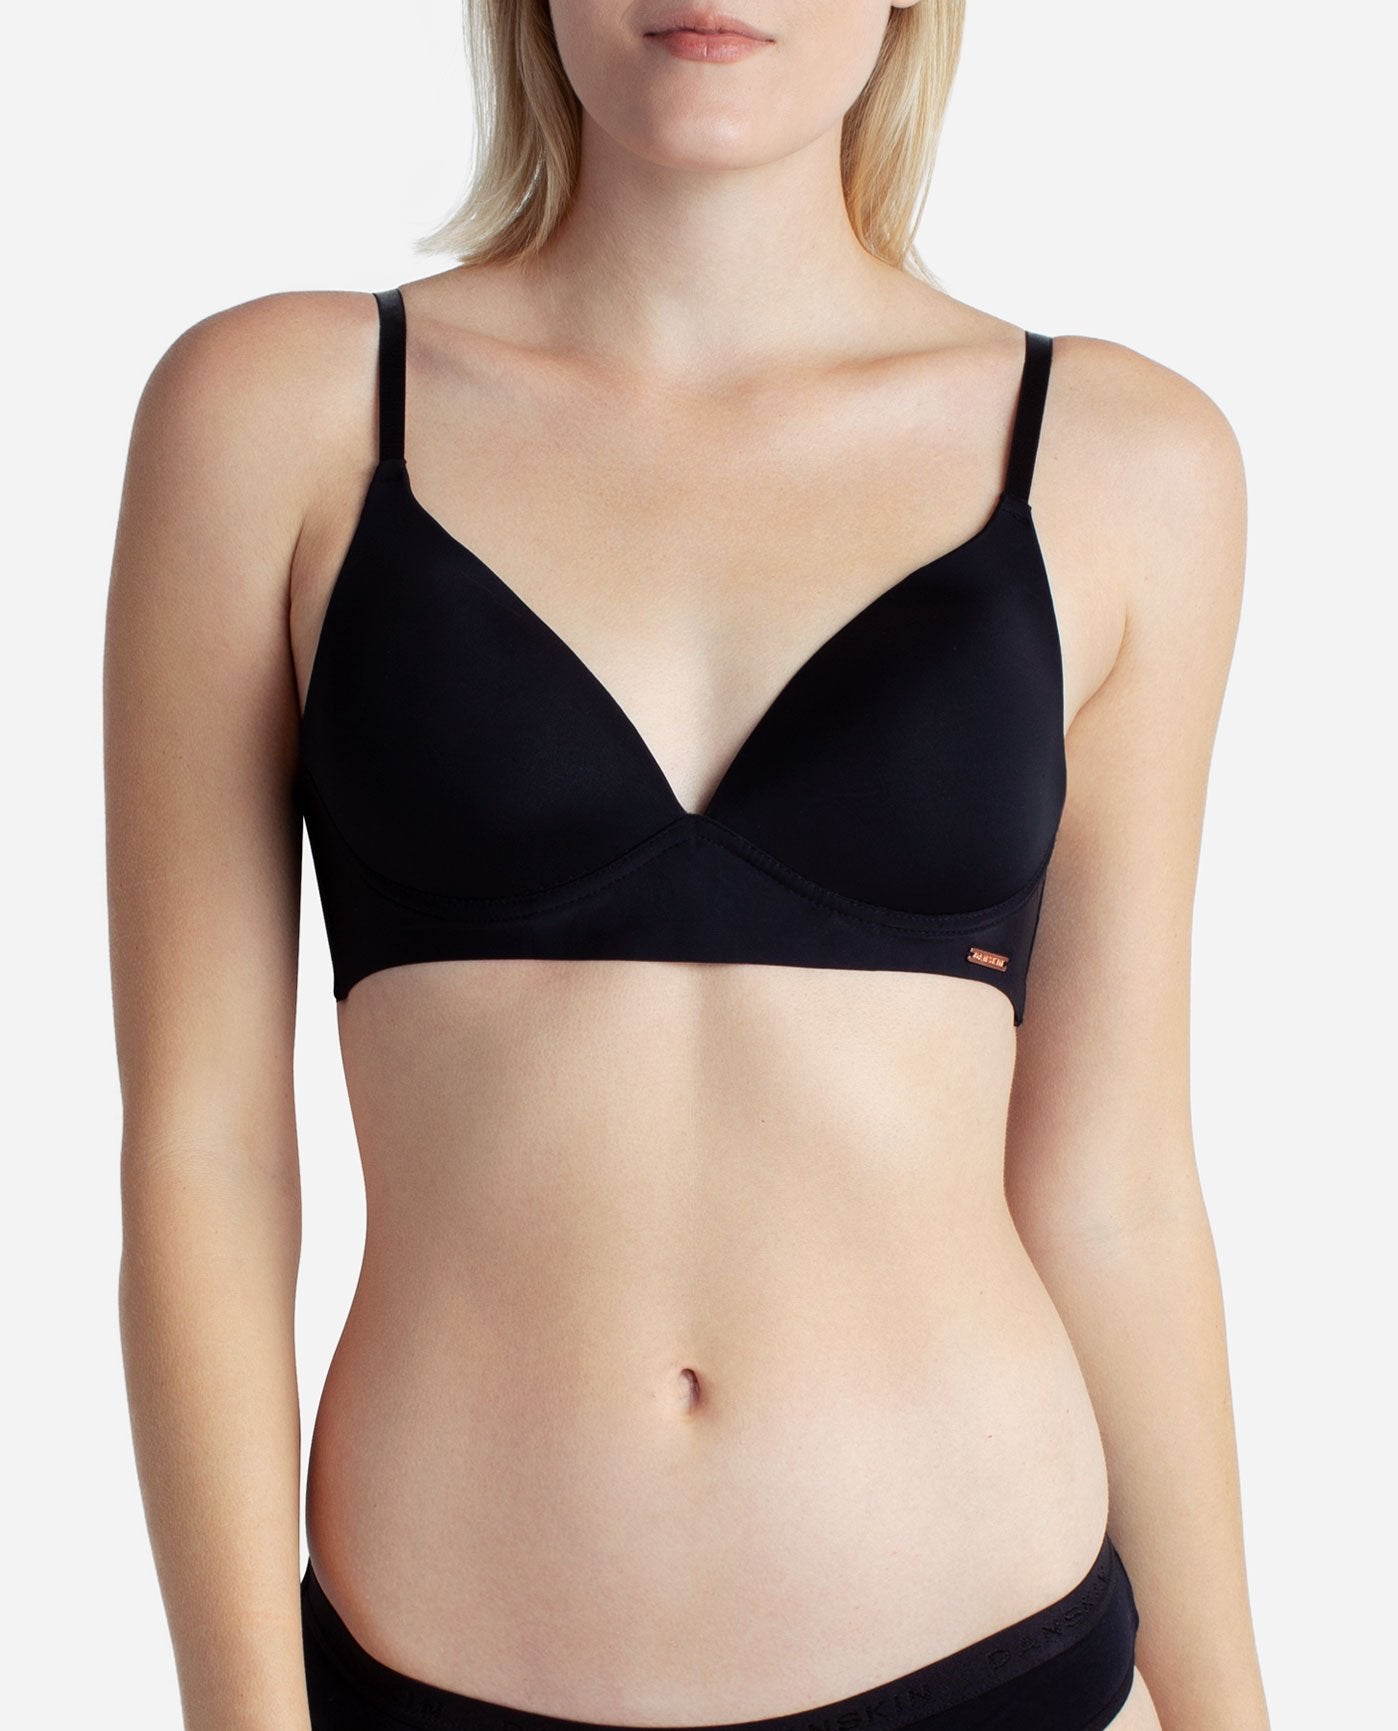 Danskin Bra Black Size L - $9 (40% Off Retail) - From Olivia